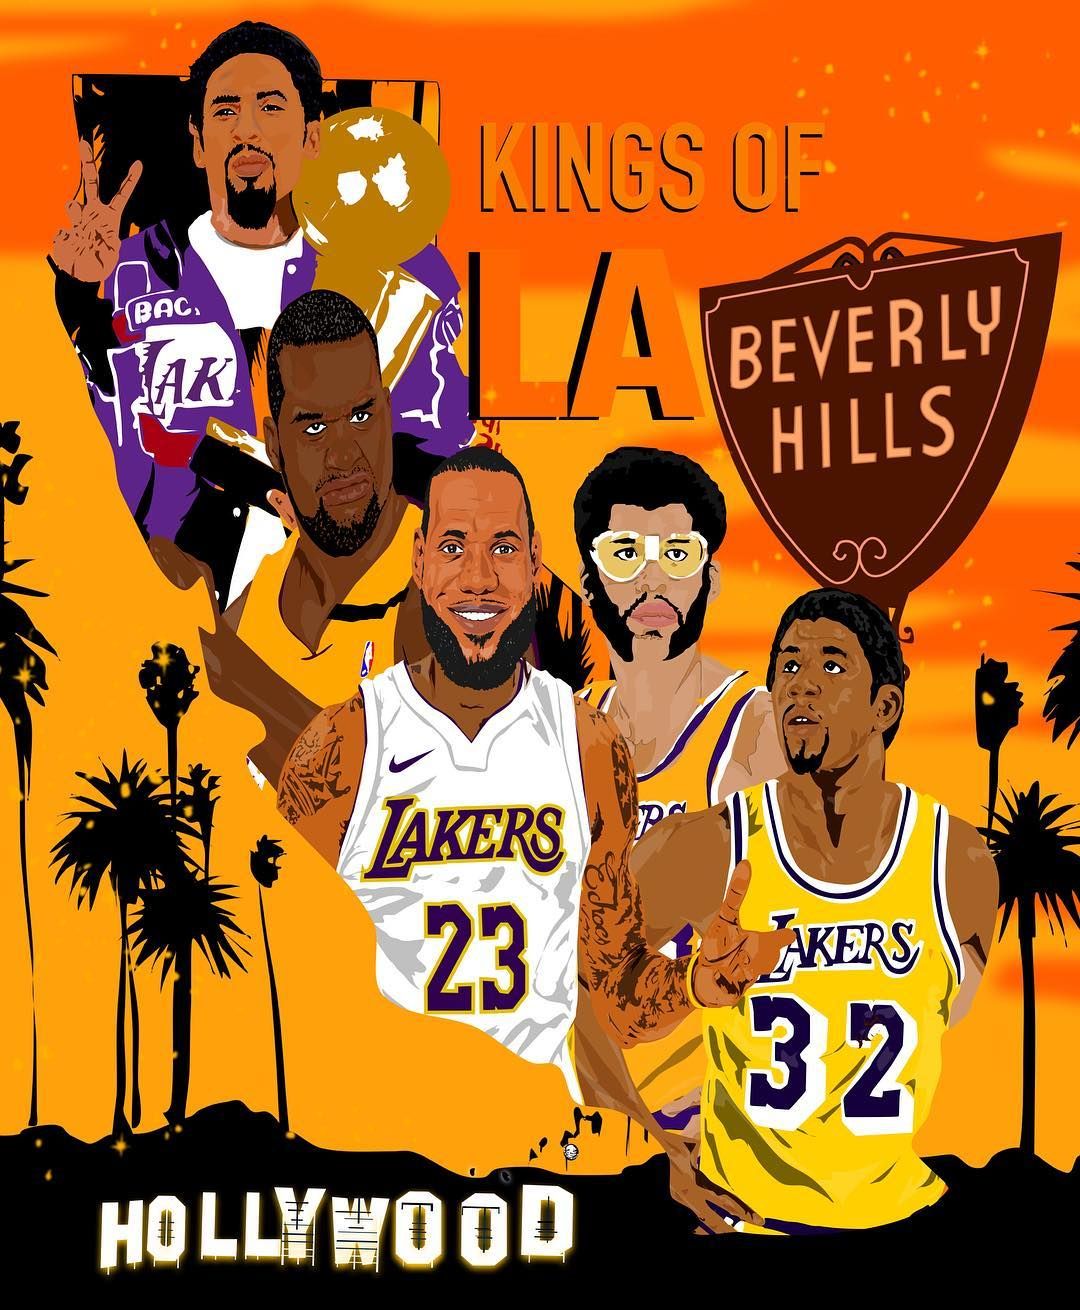 Cartoon Lebron Lakers Wallpapers